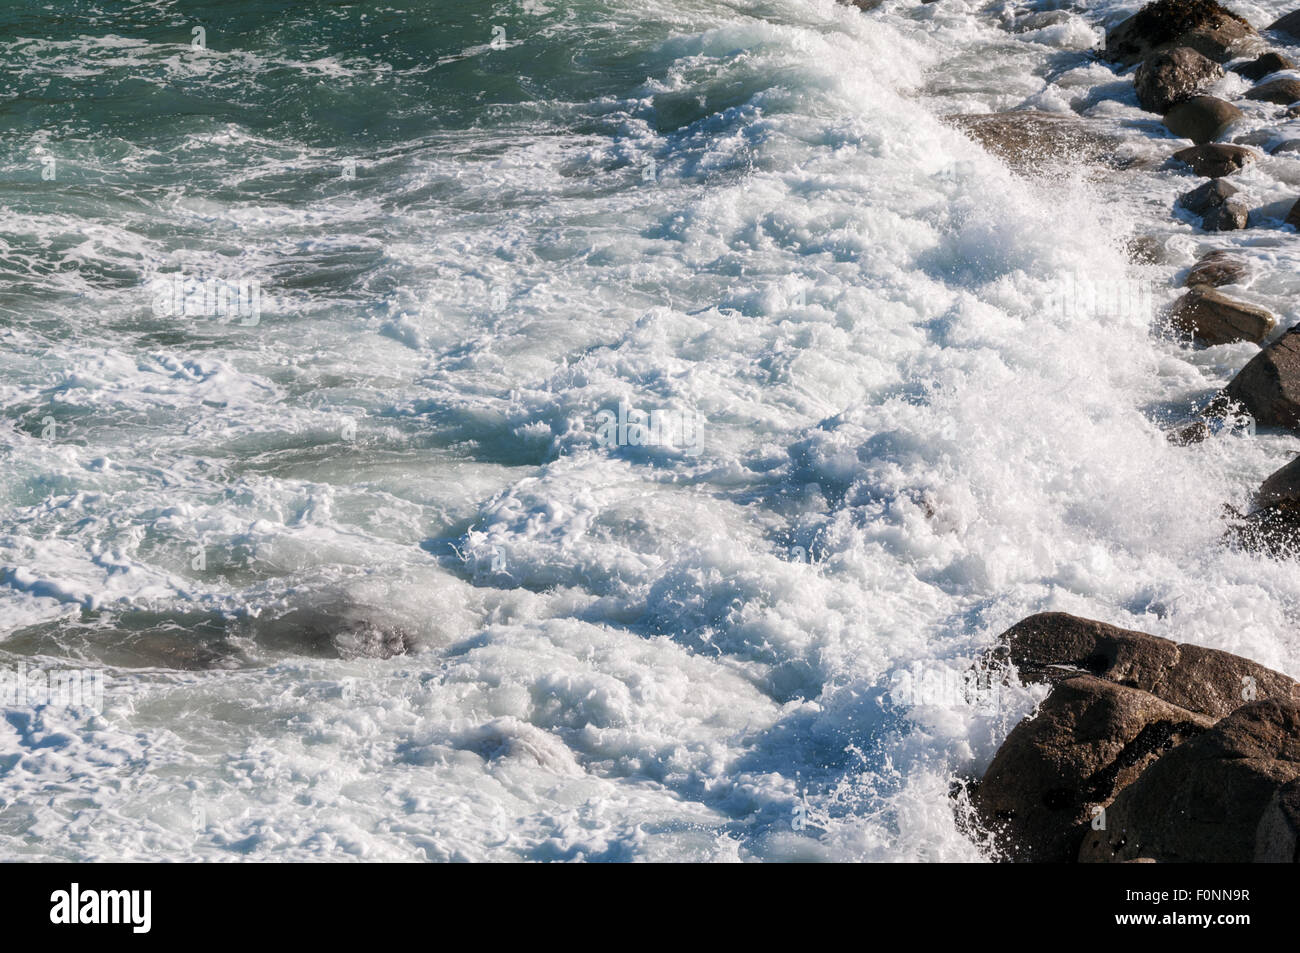 Close up detail shot of waves crashing against rocks Stock Photo